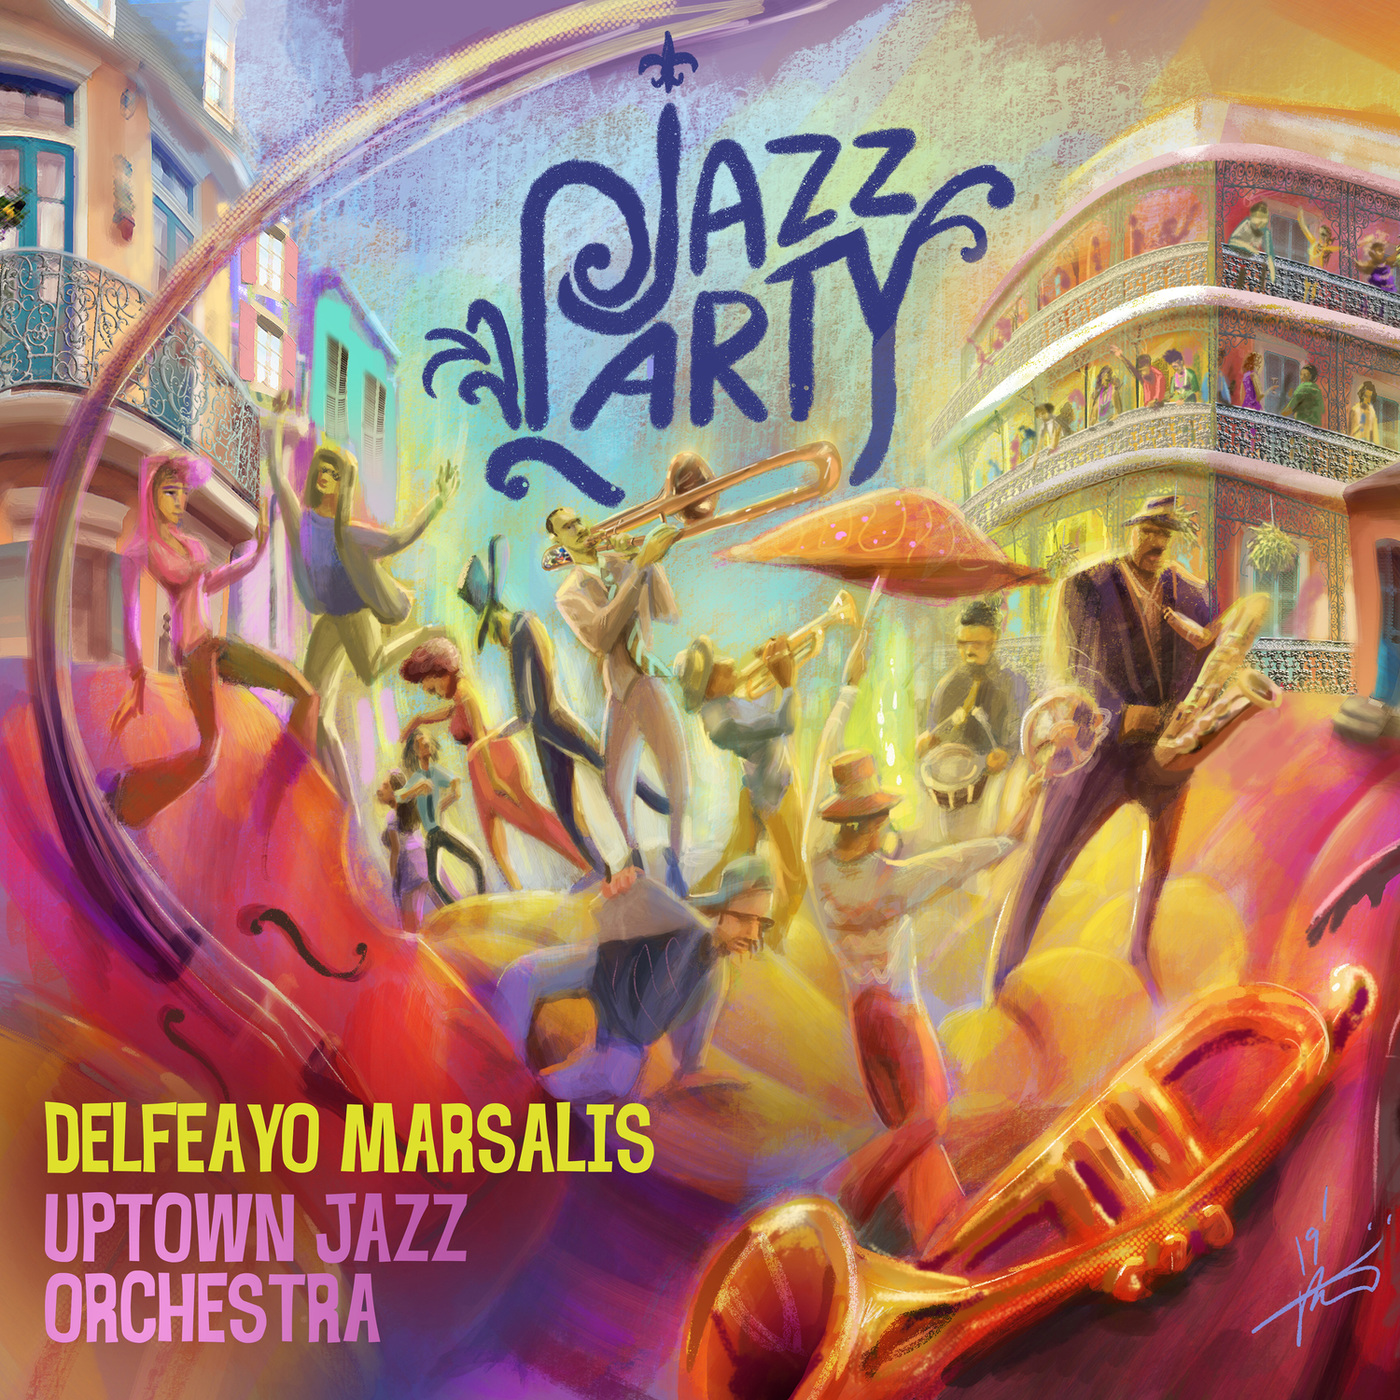 Delfeayo Marsalis & The Uptown Jazz Orchestra - Jazz Party 2020